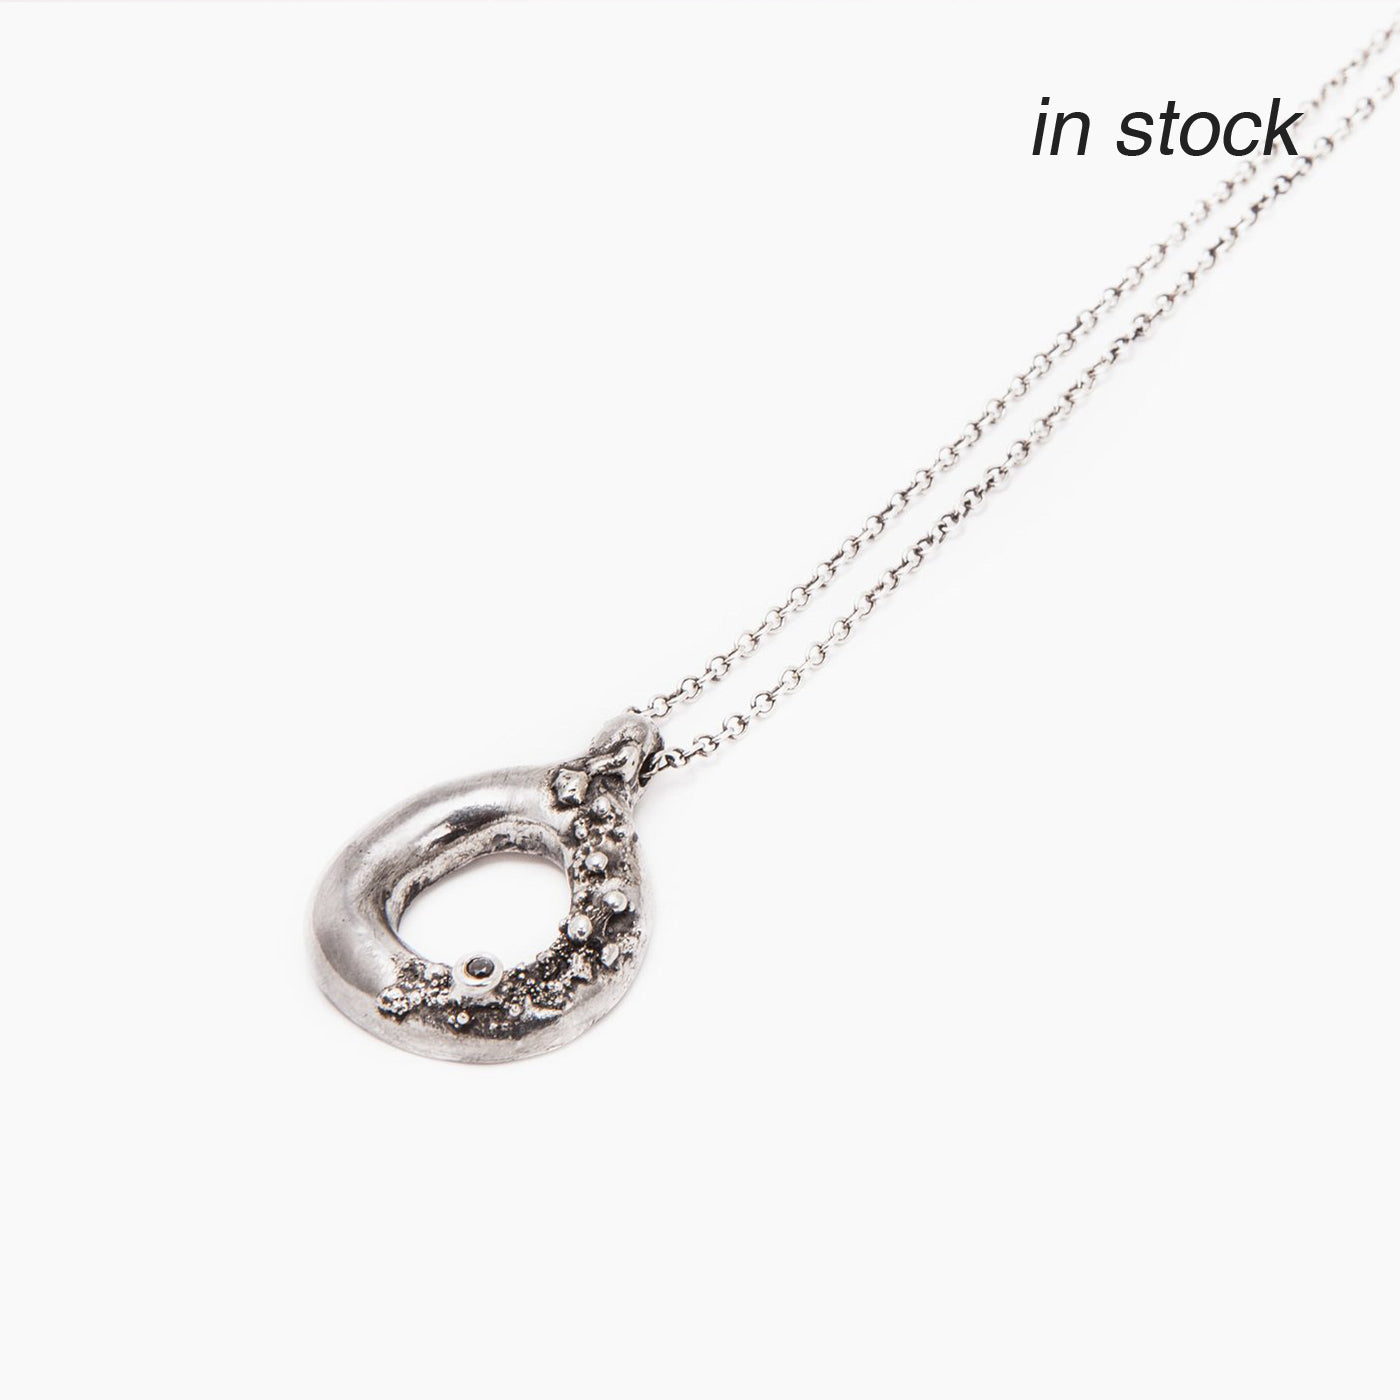 pendant asterism silver black diamond product view innan jewellery in stock